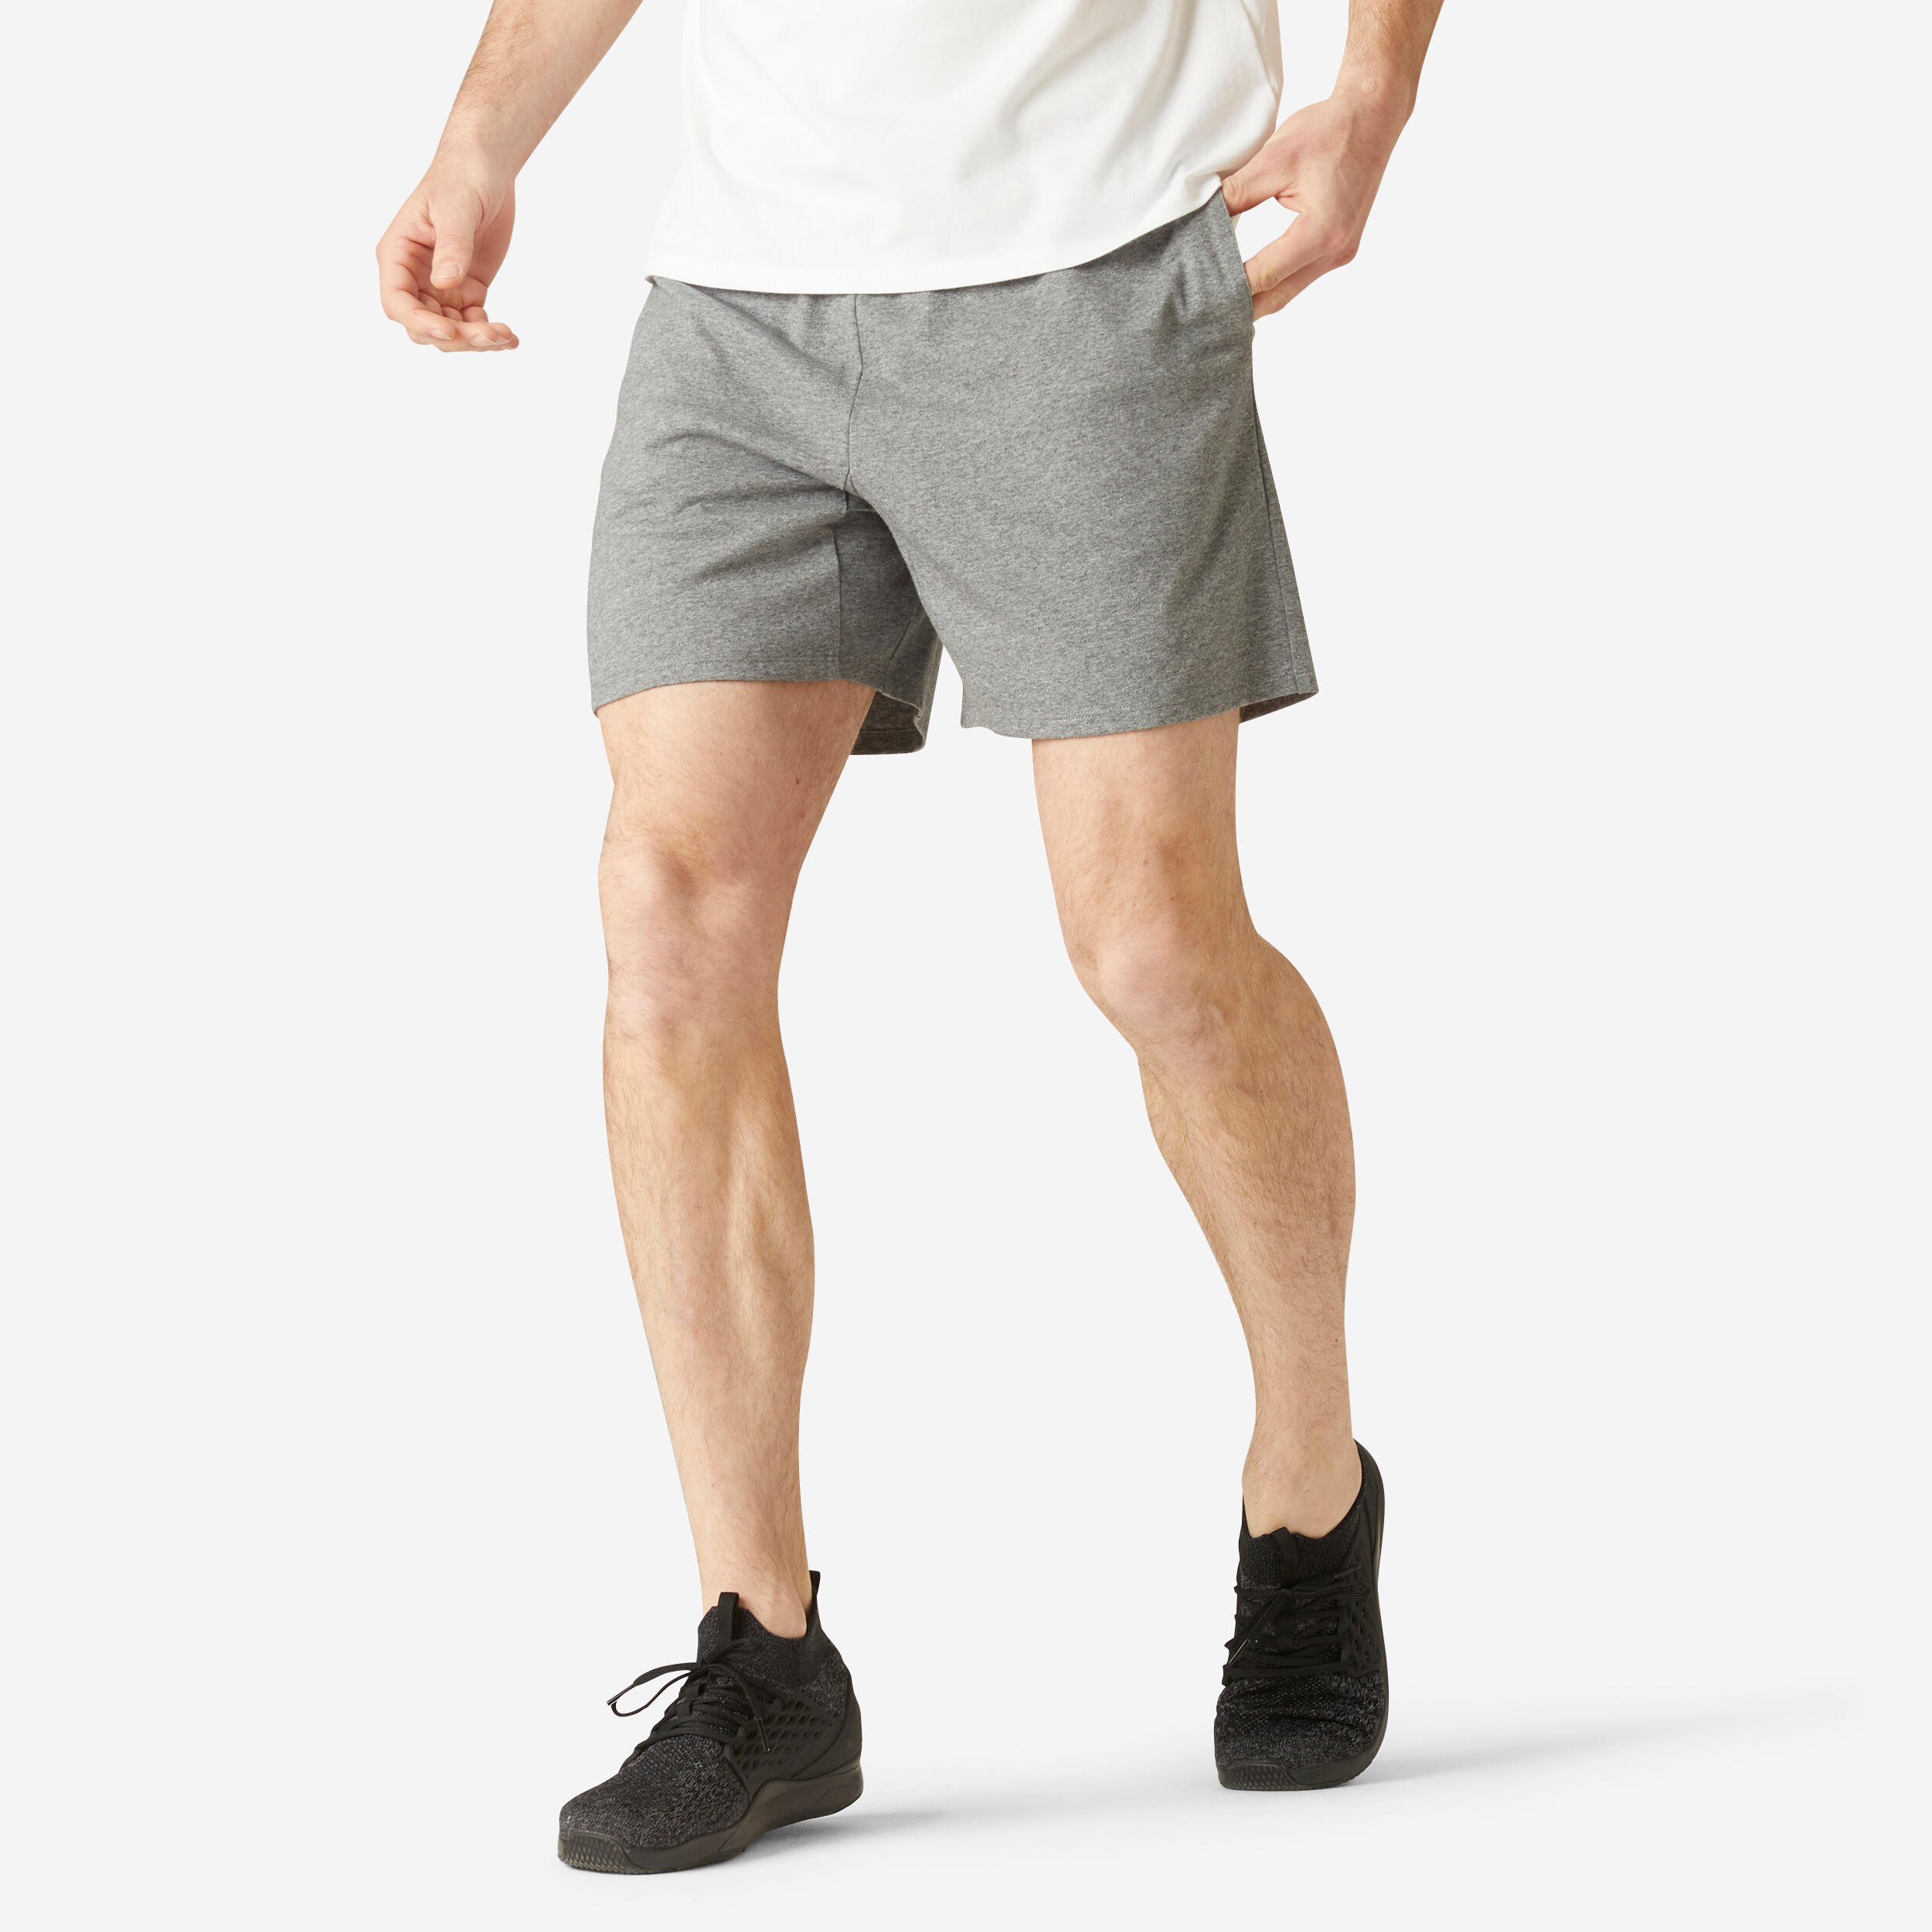 https://contents.mediadecathlon.com/p2073161/k$fa5db4e274c467b2ef0d0acf402f13e9/men-s-regular-fit-short-cotton-fitness-shorts-100-light-grey-domyos-8601429.jpg